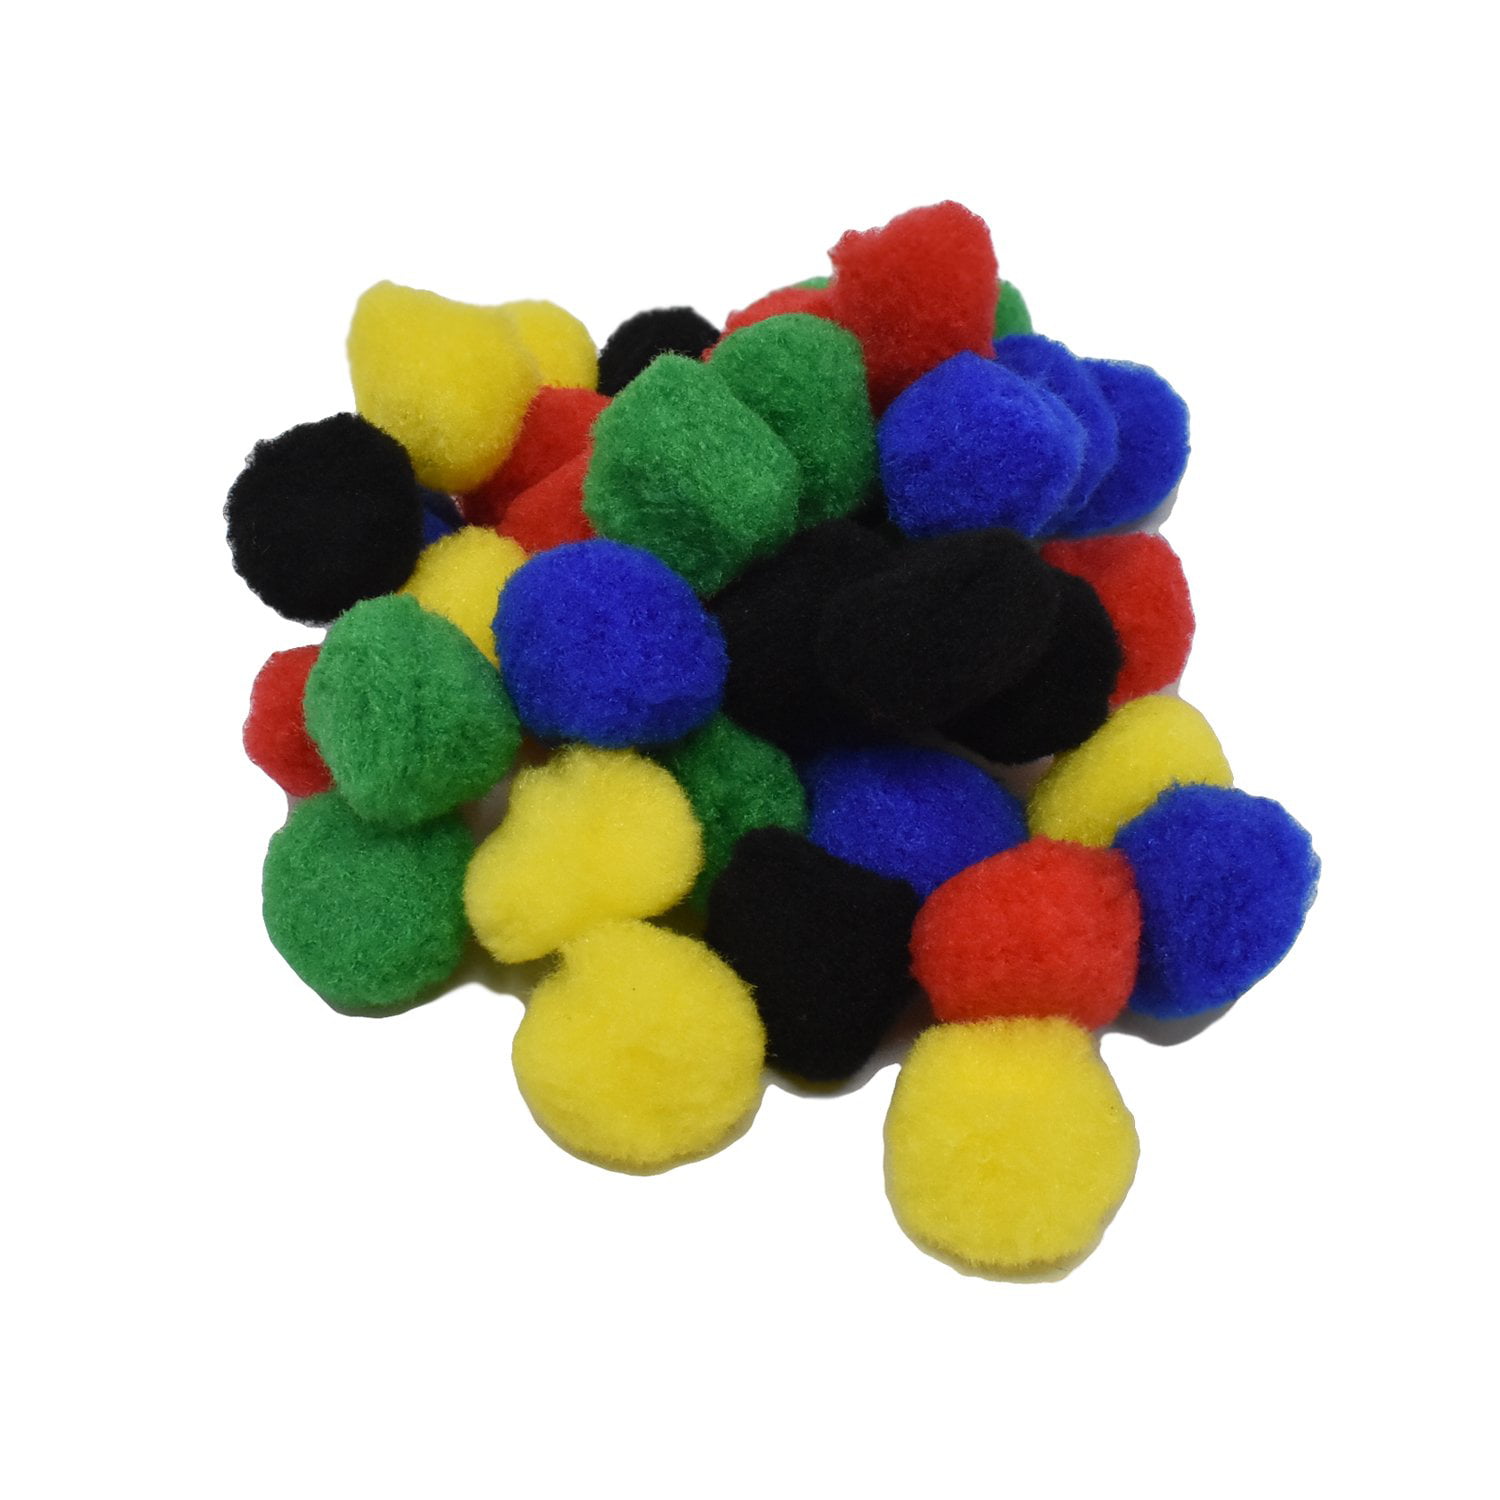 school home work 140 x fuzzy craft pom pom balls Mixed Colour 2cm Small Card 